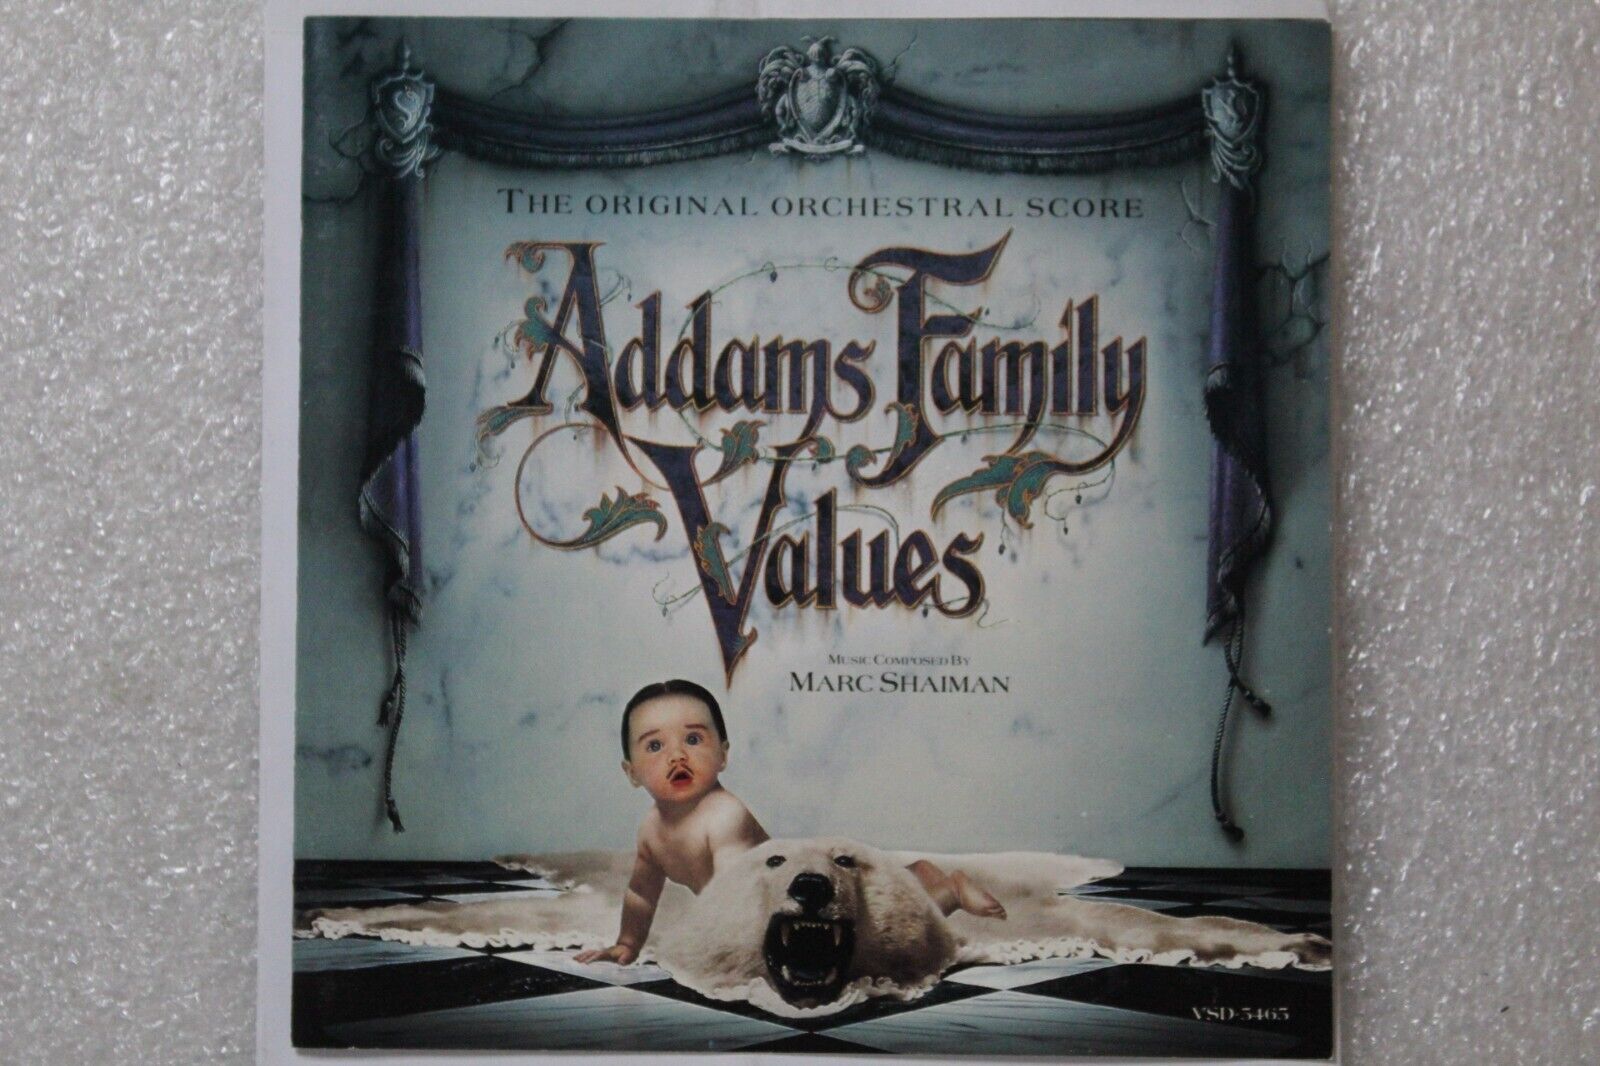 Addams Family Values - Soundtrack Score CD Rare Collectors Item